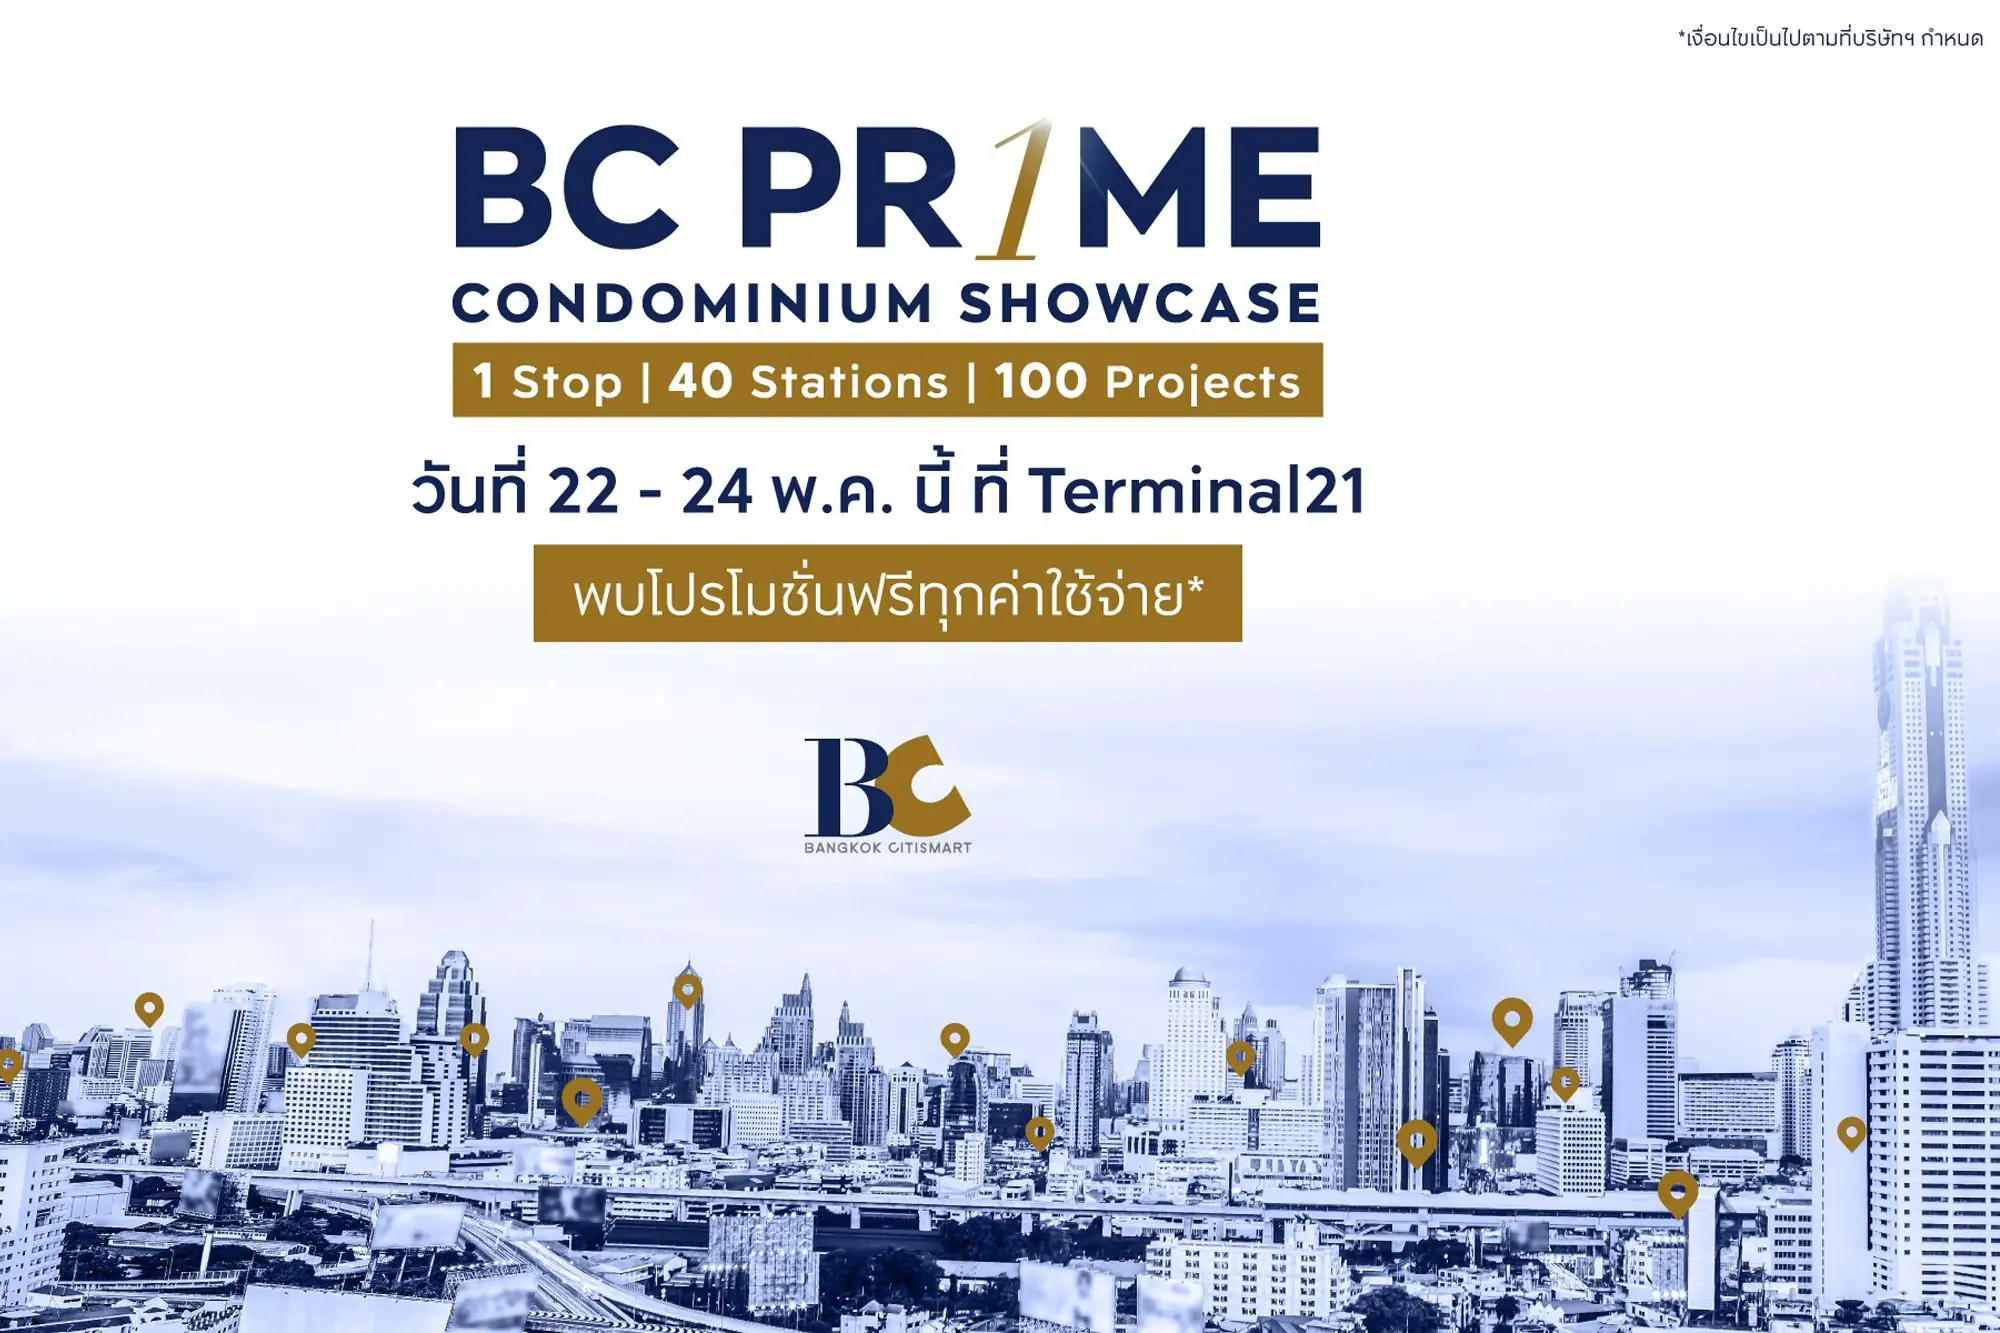 BC Prime Condominium Showcase 2018 房屋展示交易會 Bangkok CitiSmart